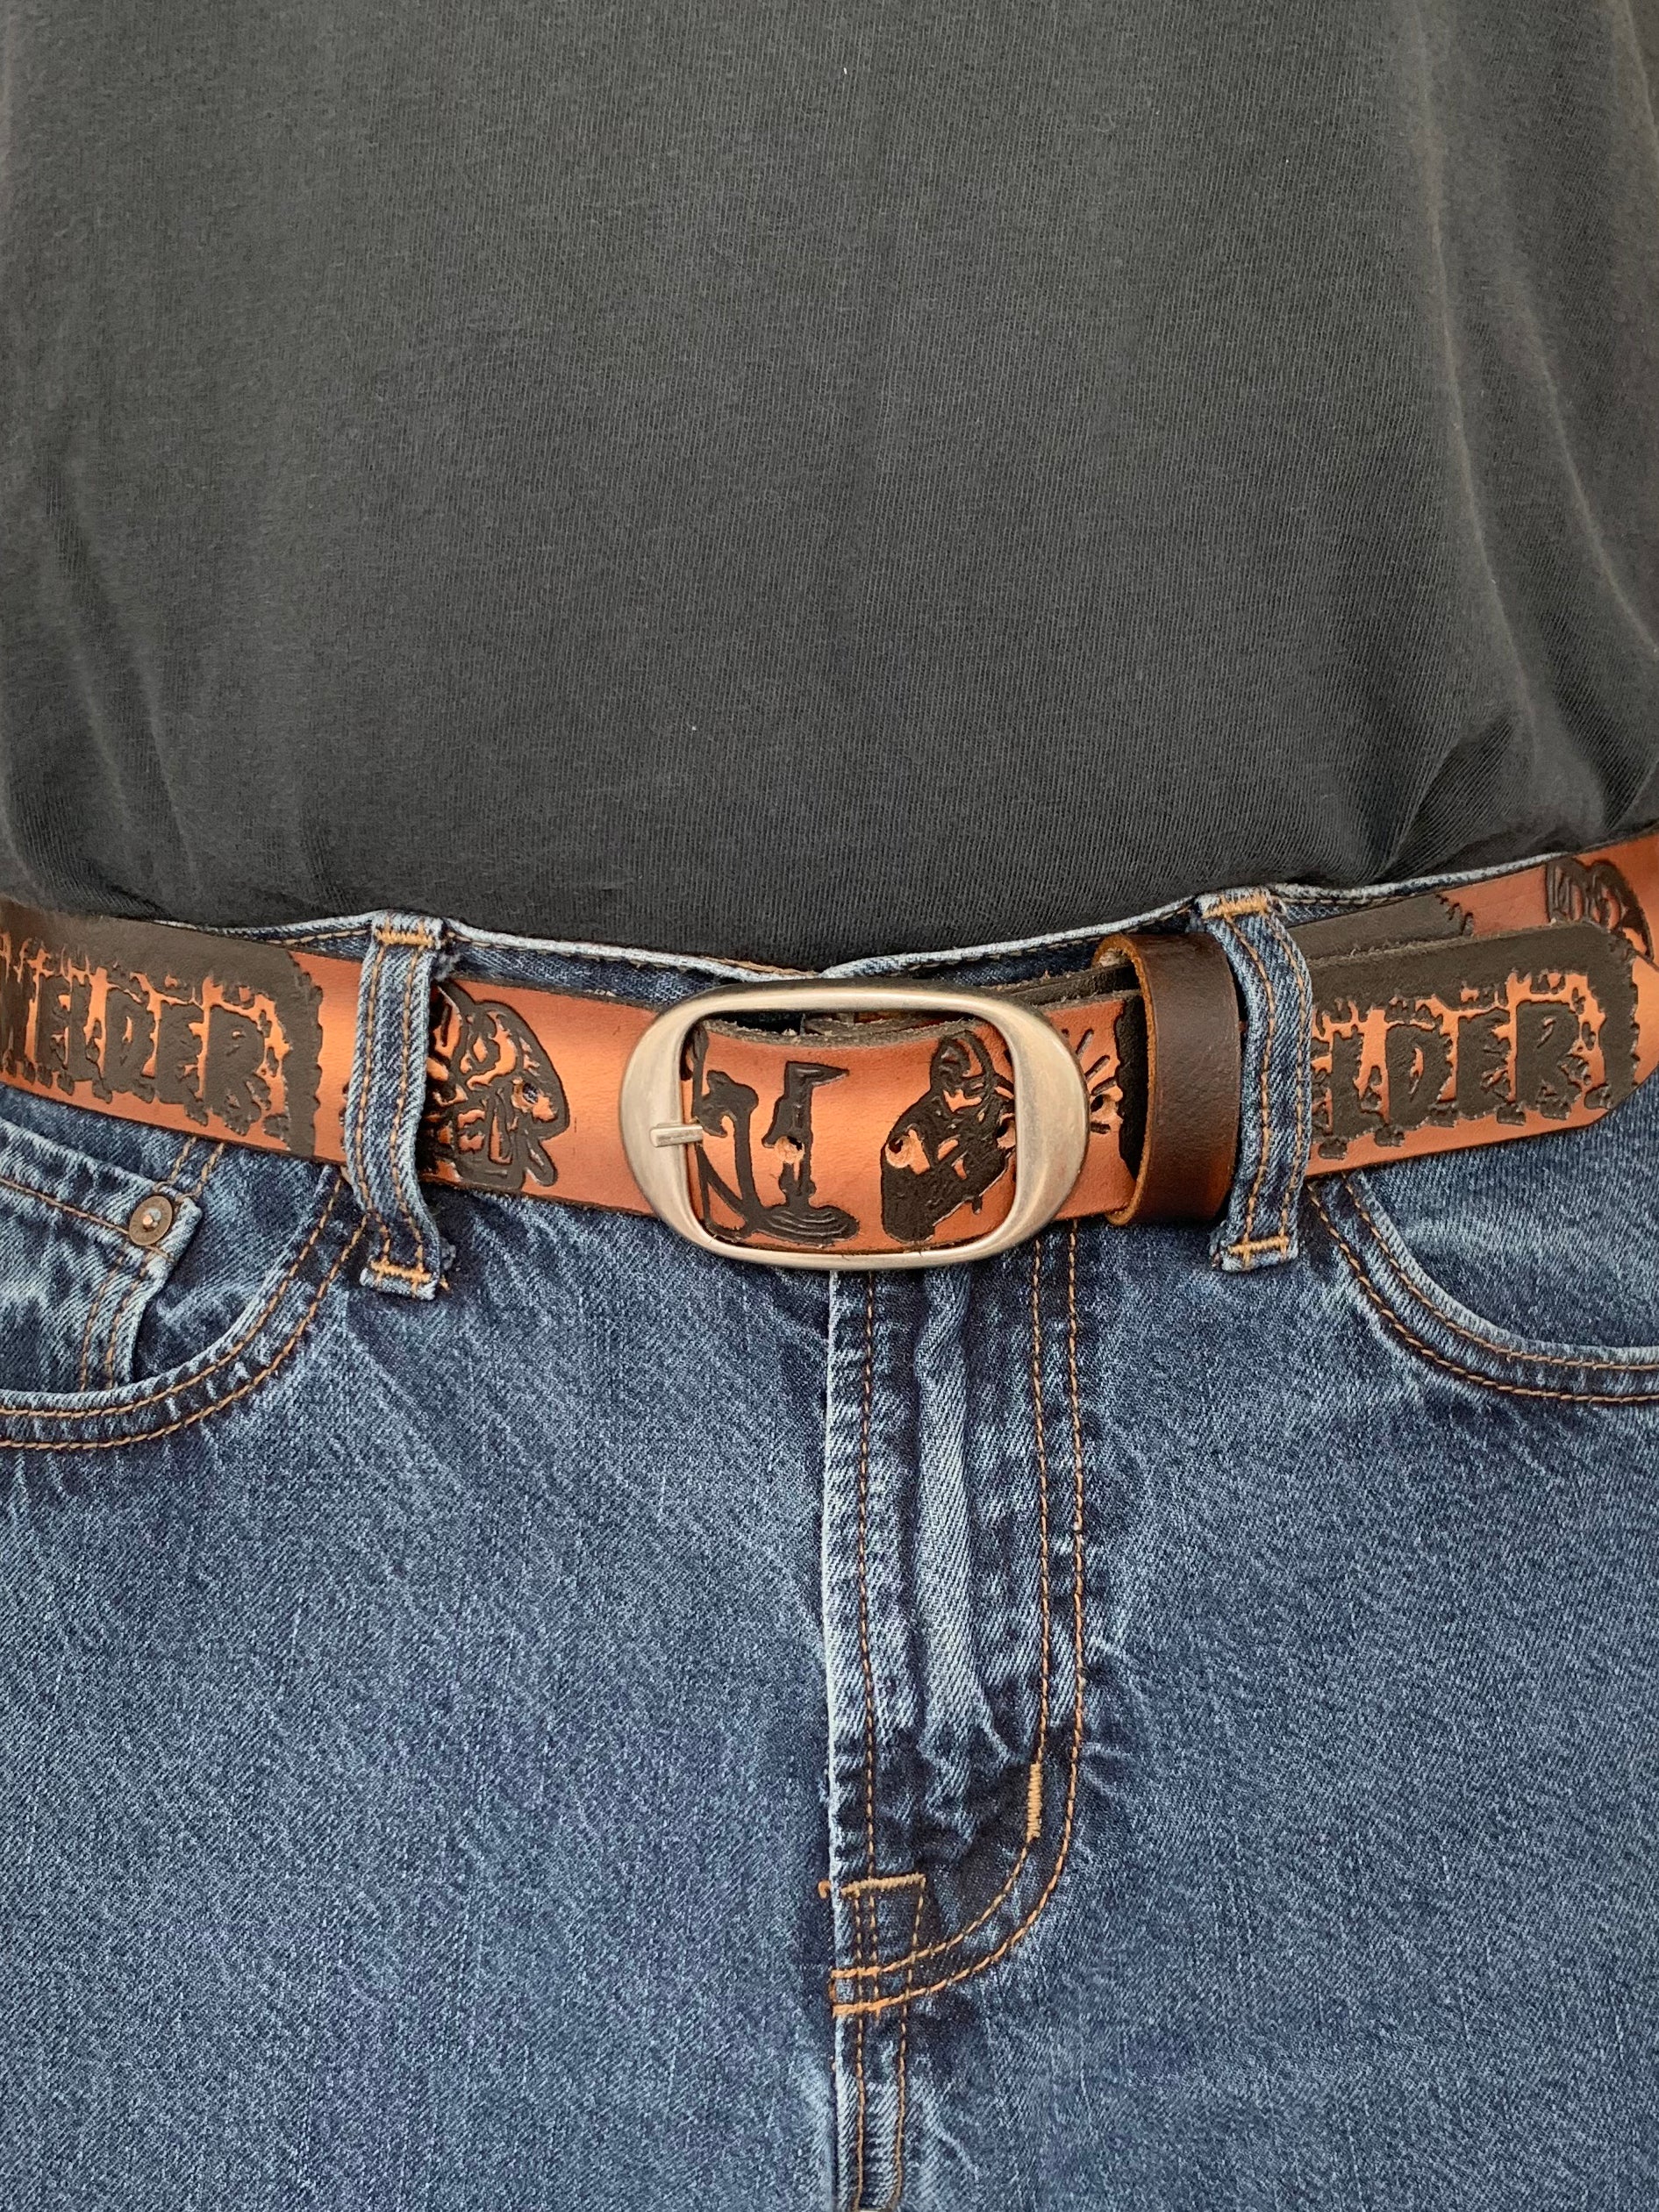 Handmade Custom Belts High Quality Leather Belts Genuine 